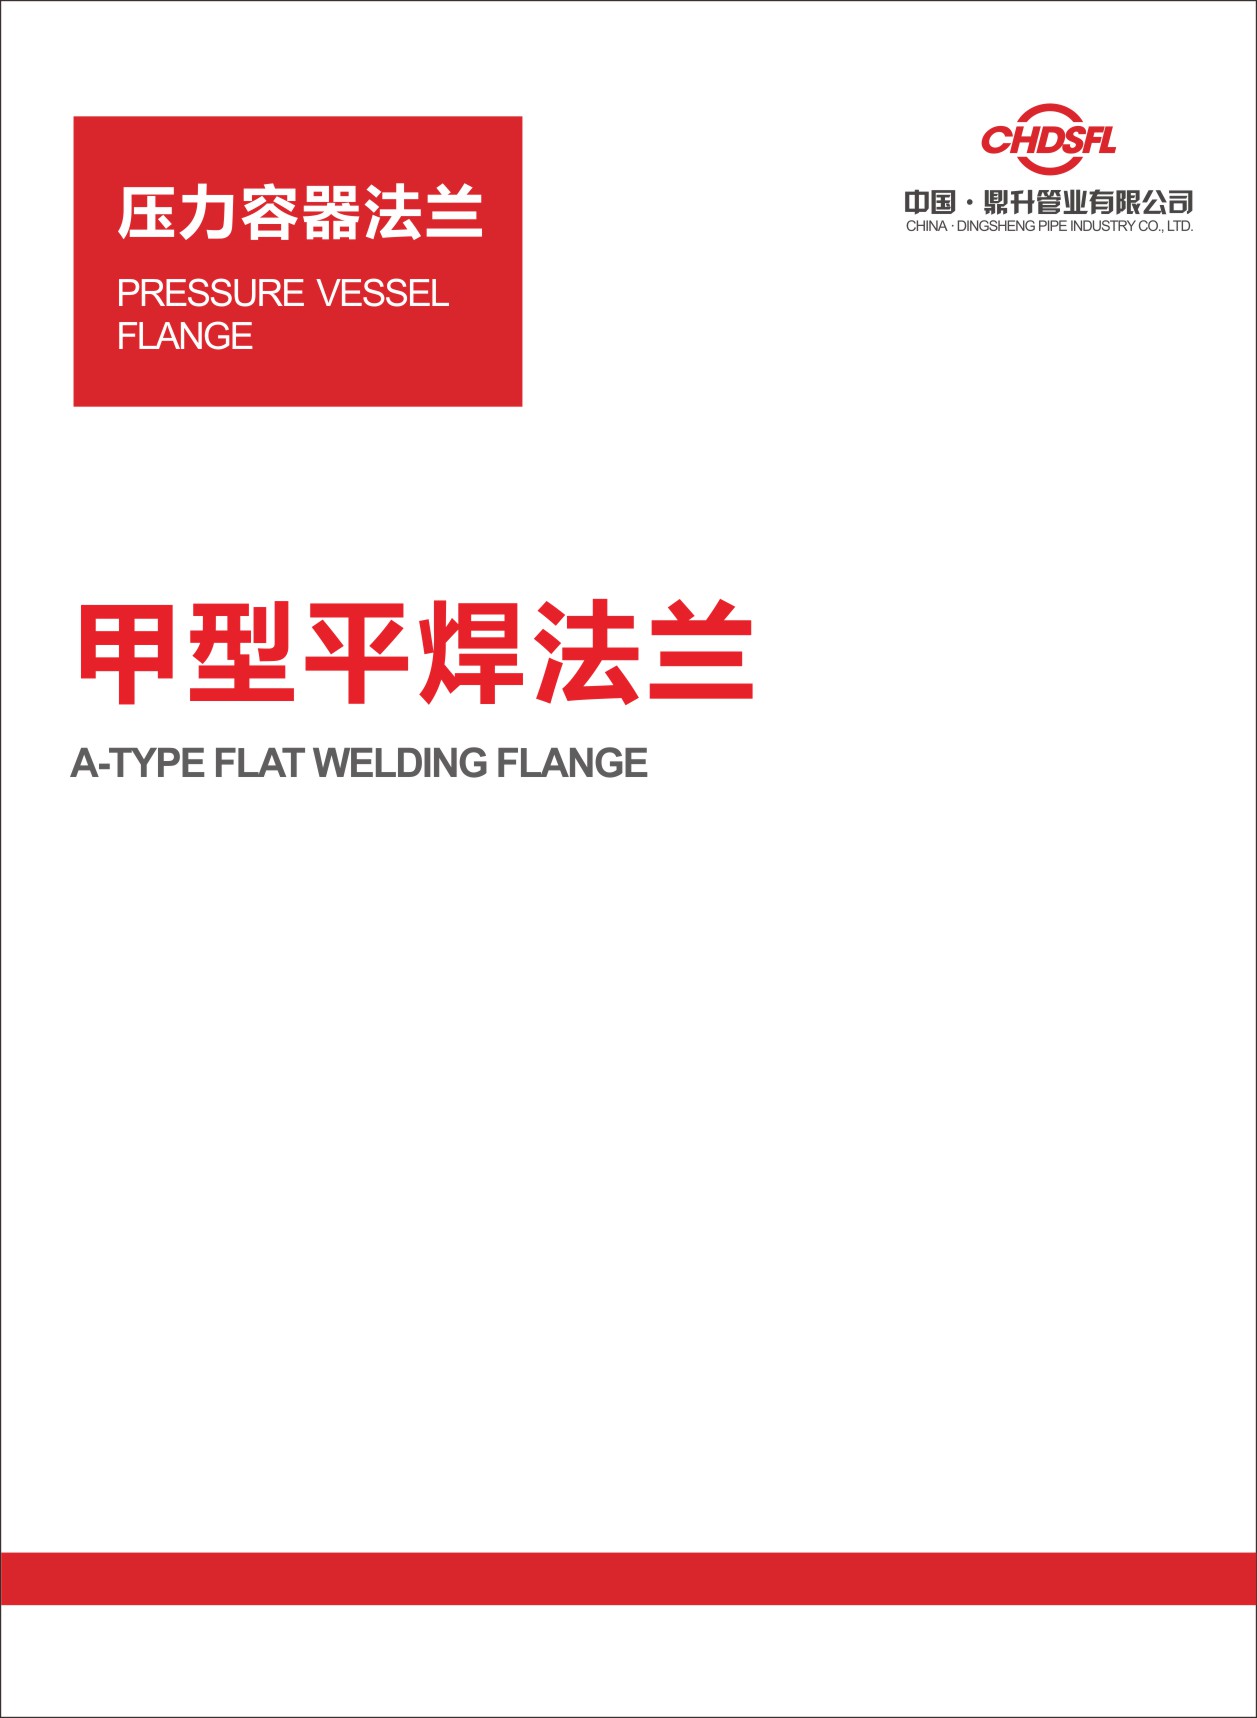 Pressure Vessel Flange-A-Type Flat Welding Flange 